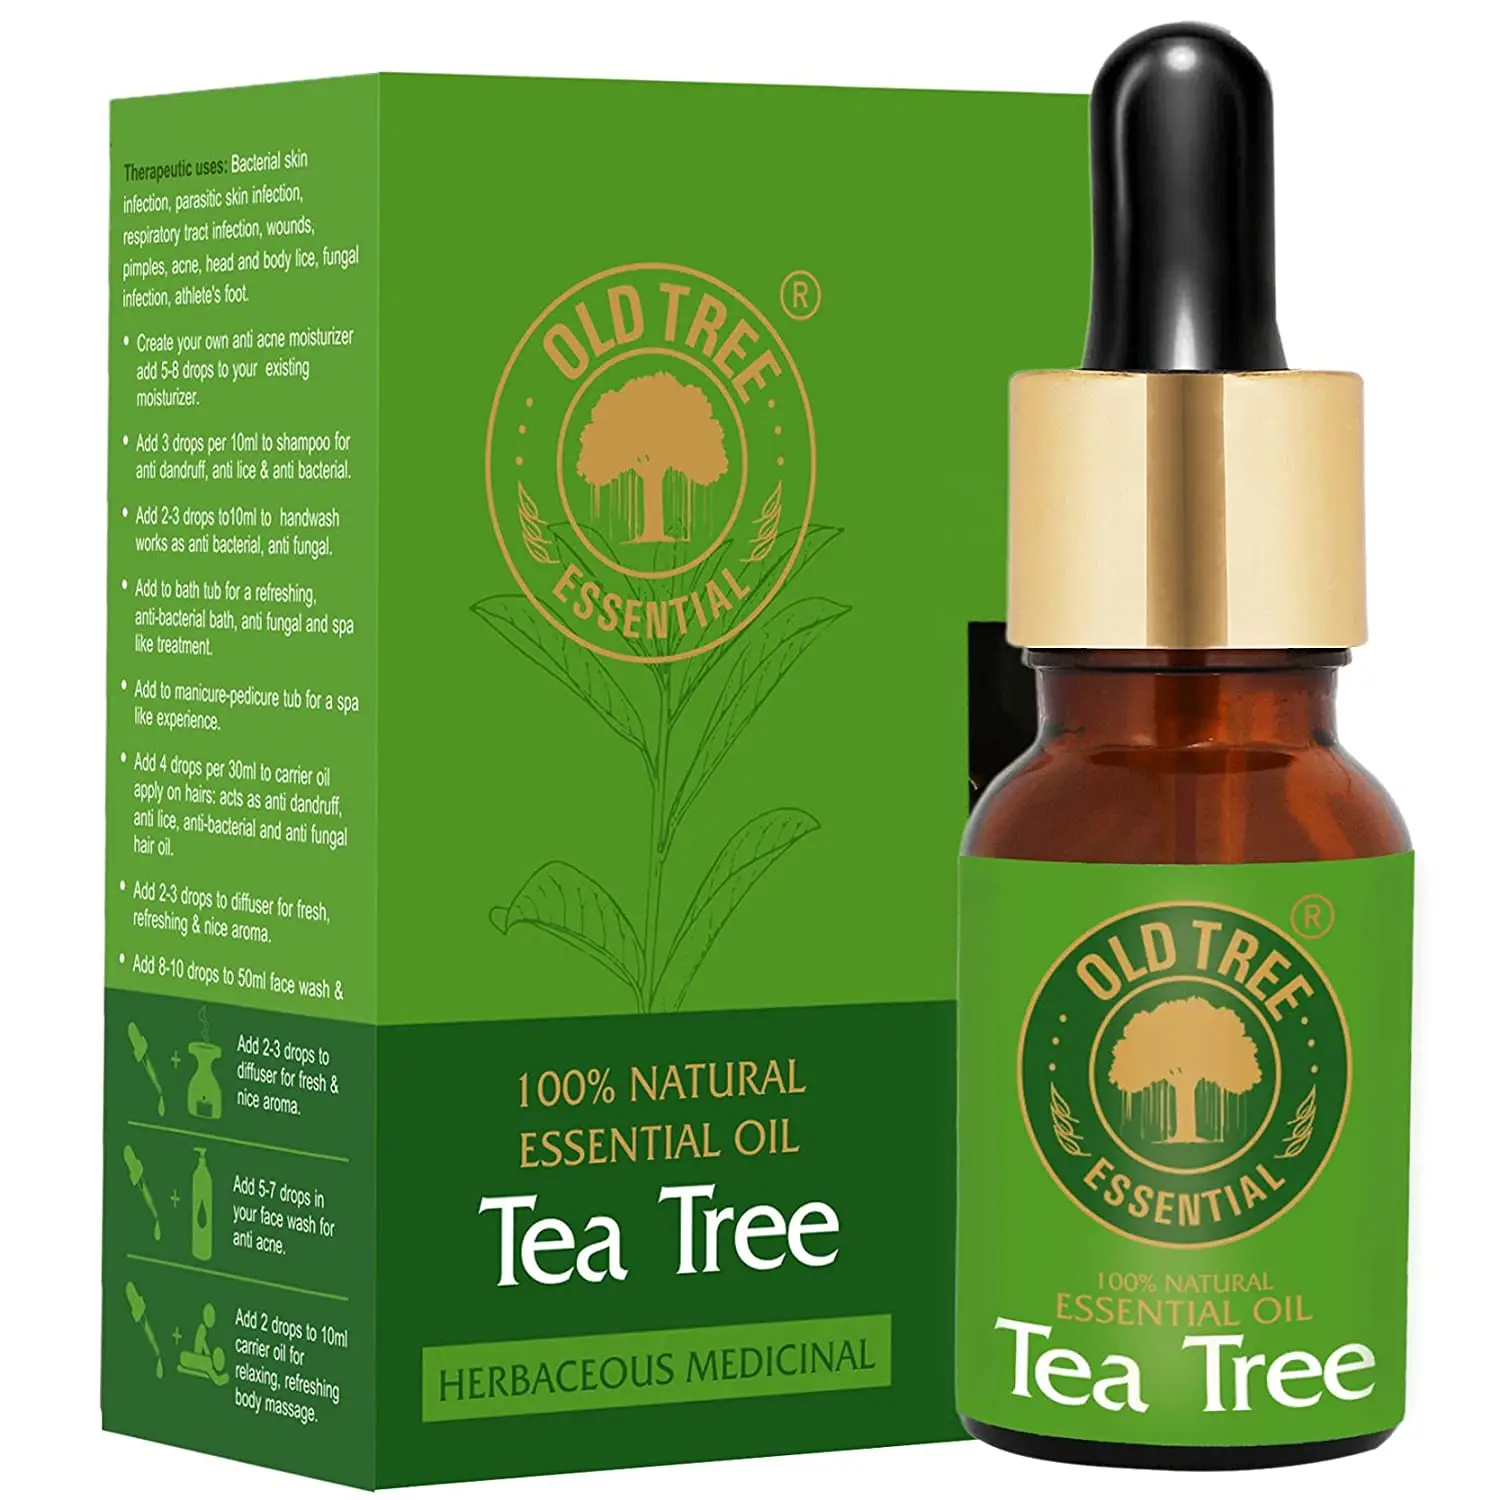 Tea tree oil benefits for hair